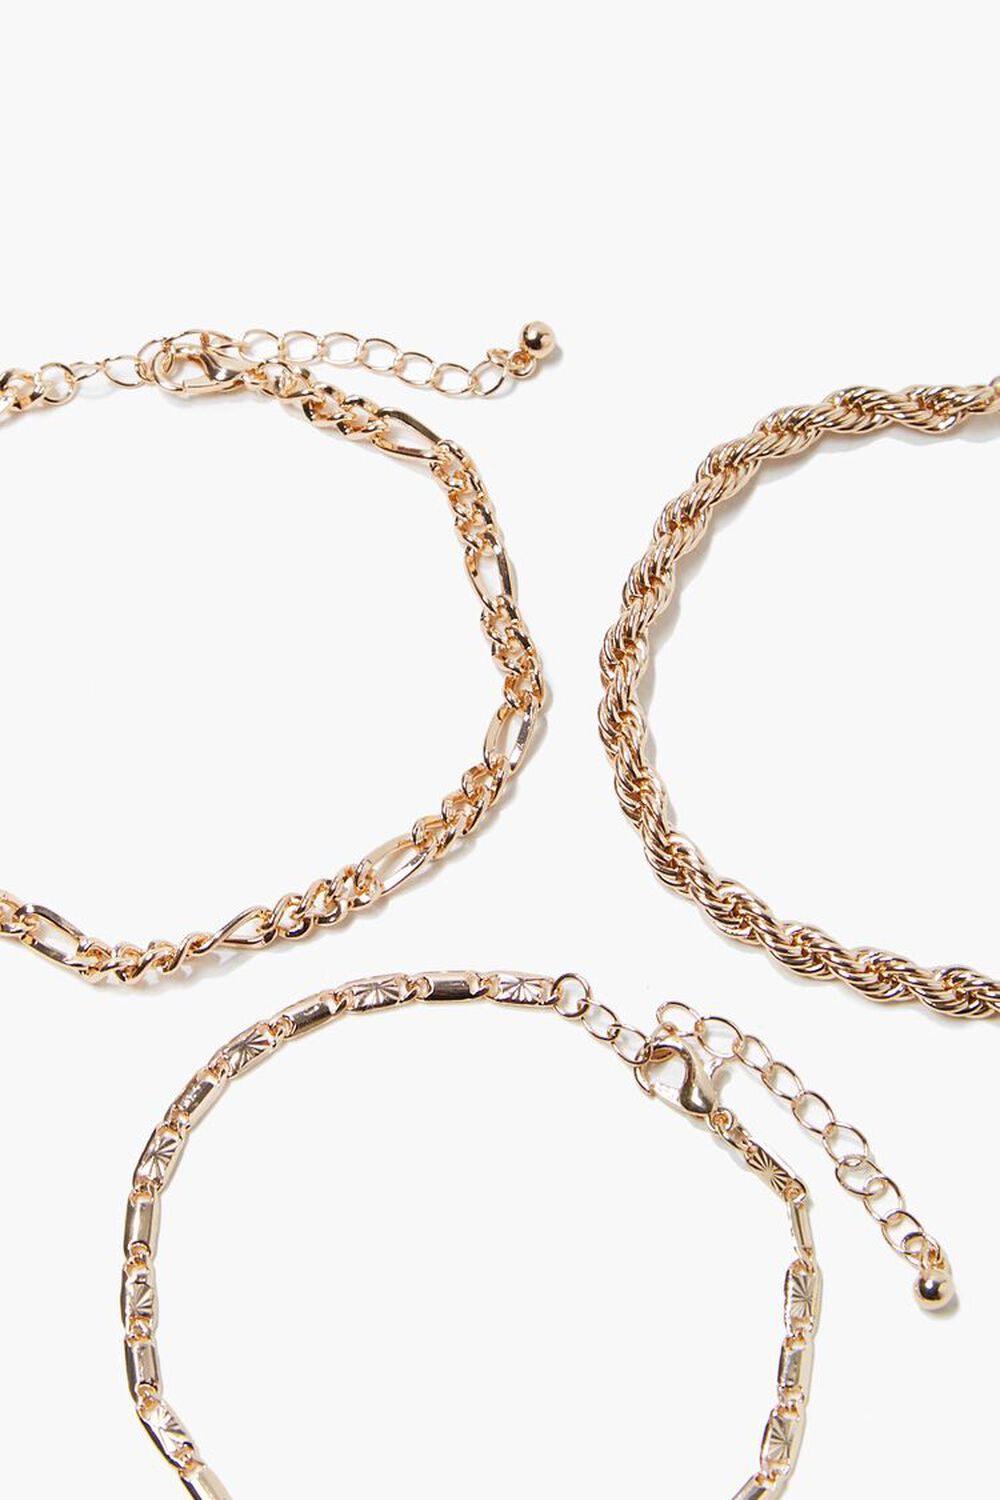 GOLD Chain Bracelet Set, image 2